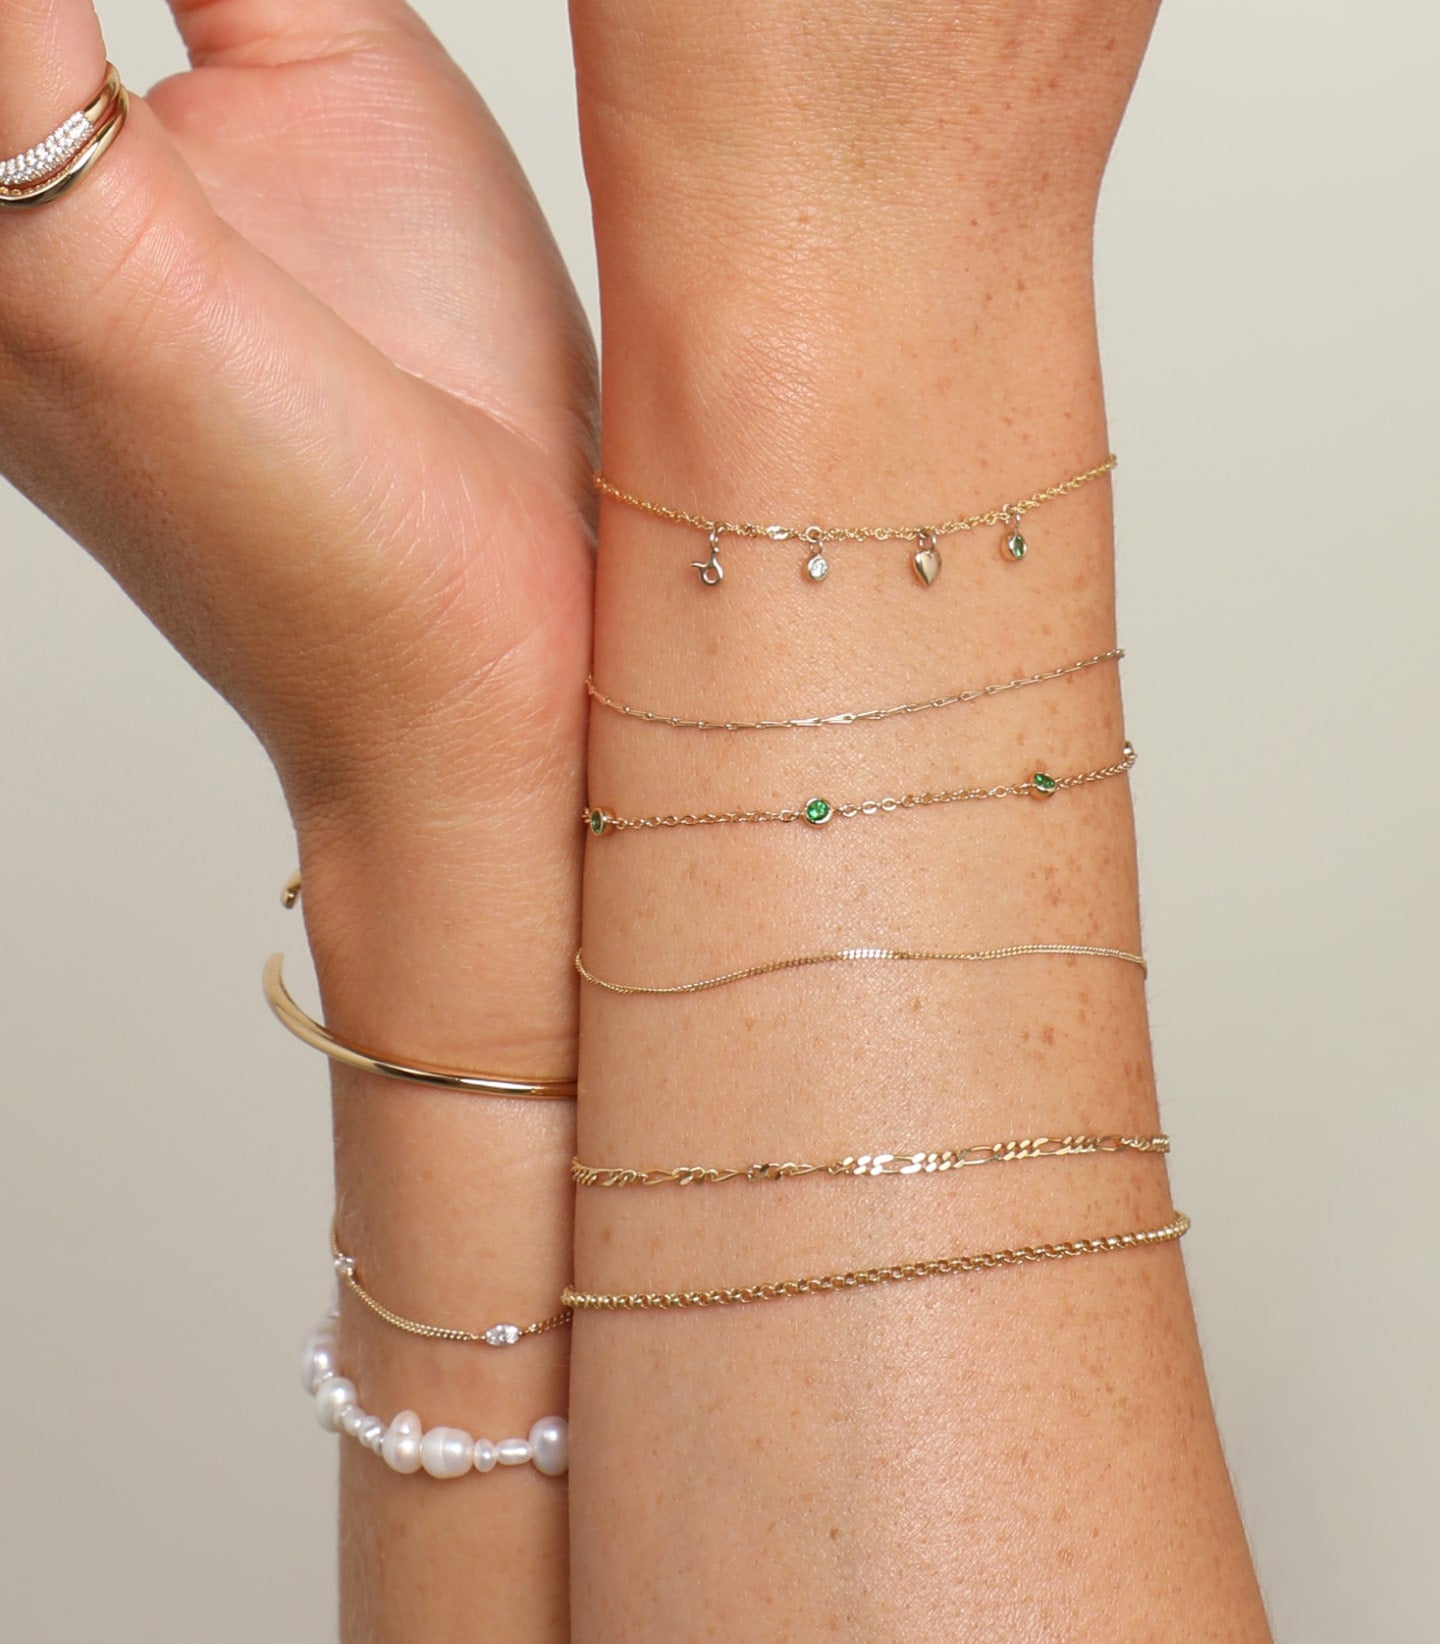 Permanent Forever Bracelets - Alexandra Marks Jewelry Chicago - Go Viral